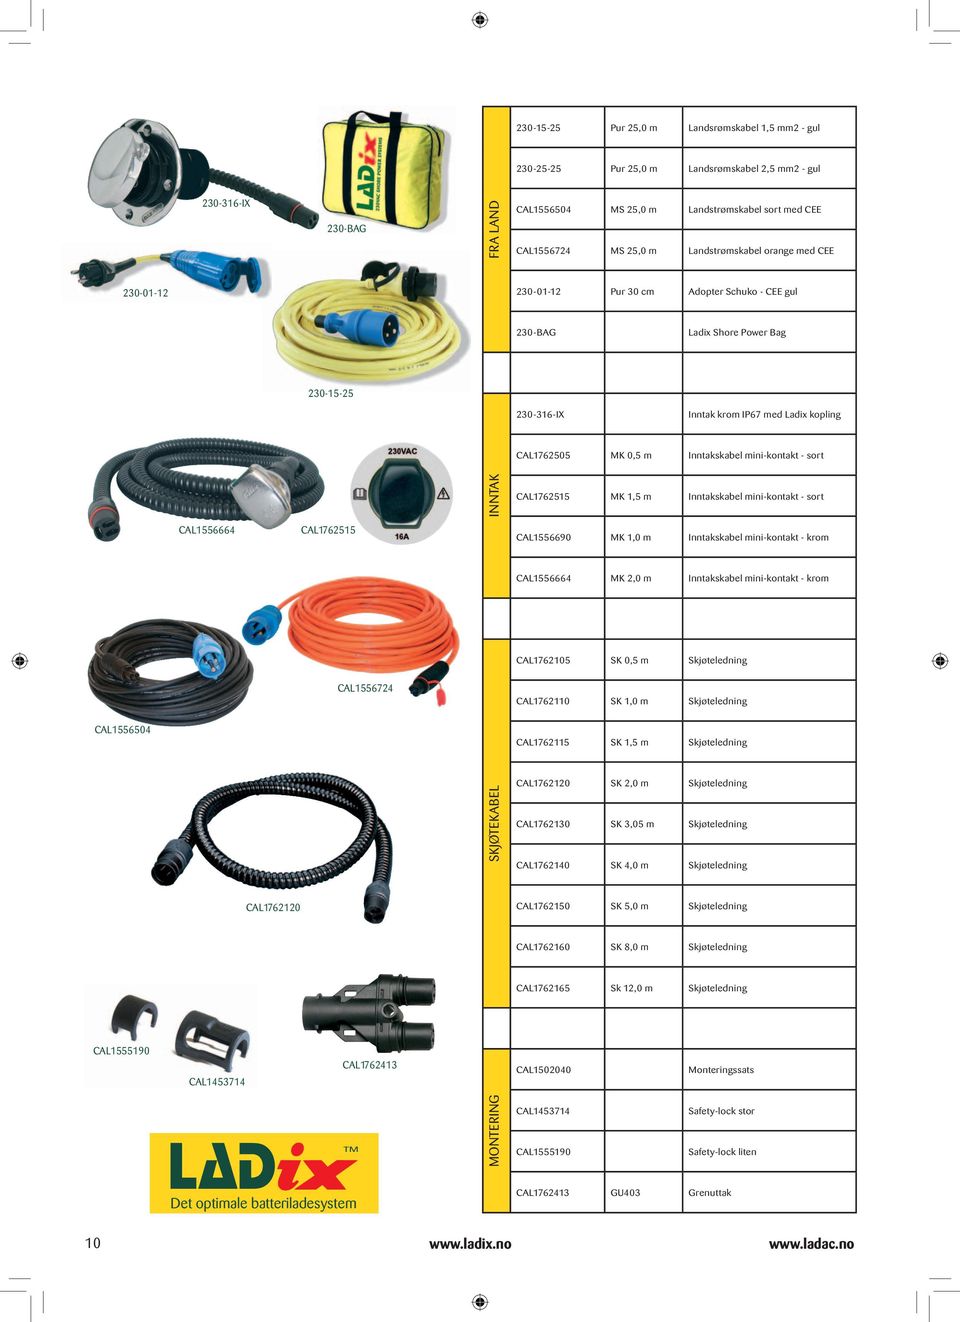 Inntakskabel mini-kontakt - sort INNTAKINNTAK CAL1762515 MK 1,5 m Inntakskabel mini-kontakt - sort CAL1556664 CAL1762515 CAL1556690 MK 1,0 m Inntakskabel mini-kontakt - krom CAL1556664 MK 2,0 m